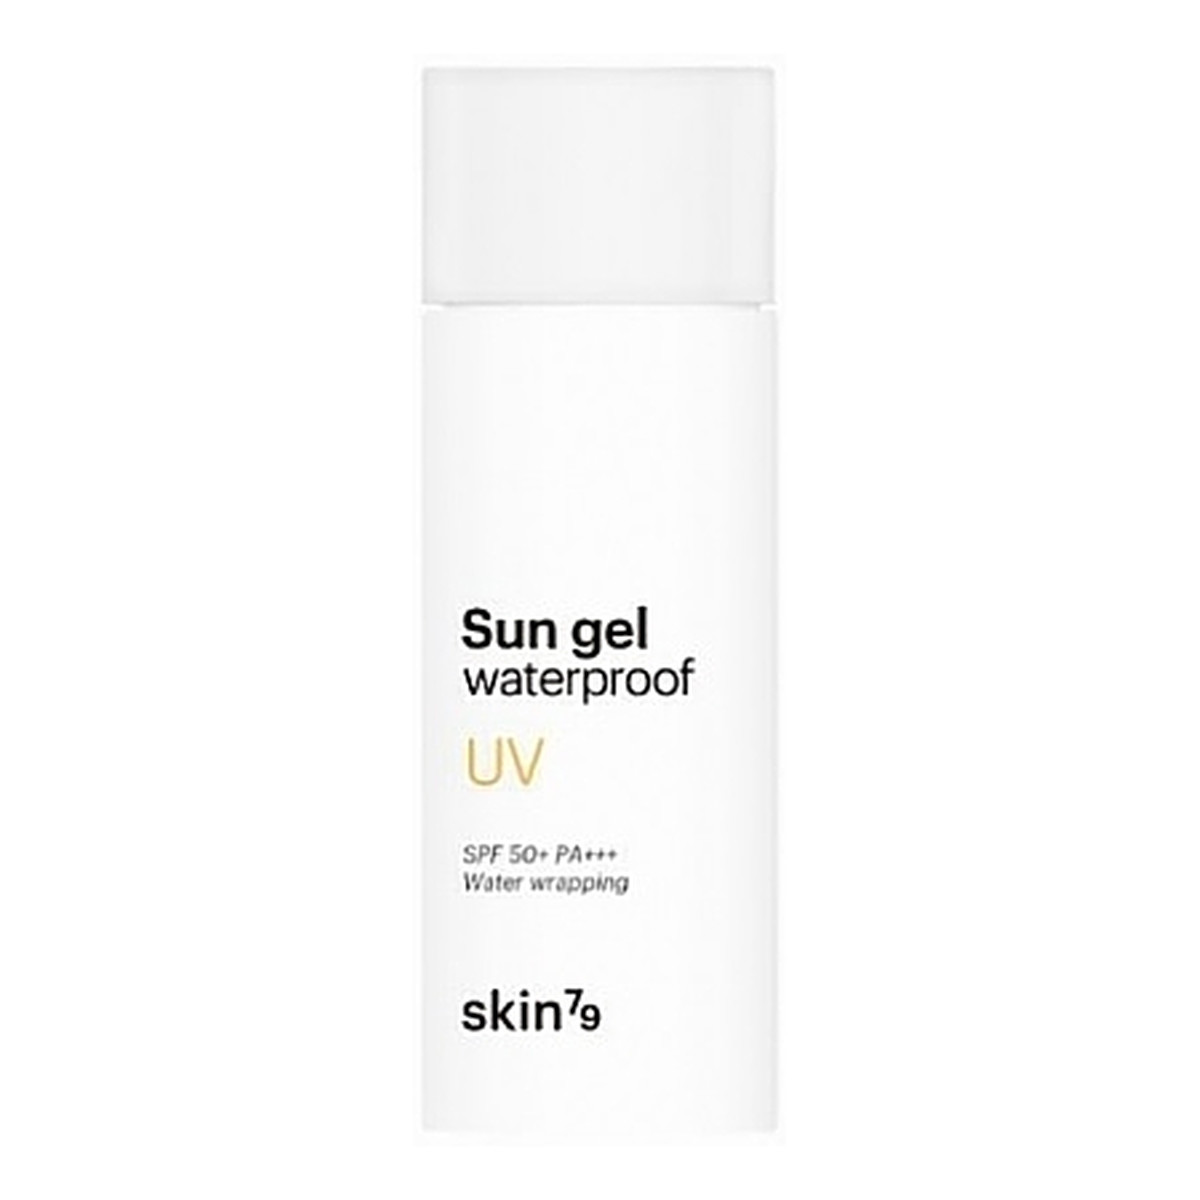 Skin79 Sun Żel PA+++Ochronny Wodoodporny Waterproof Spf50 każda cera 50ml